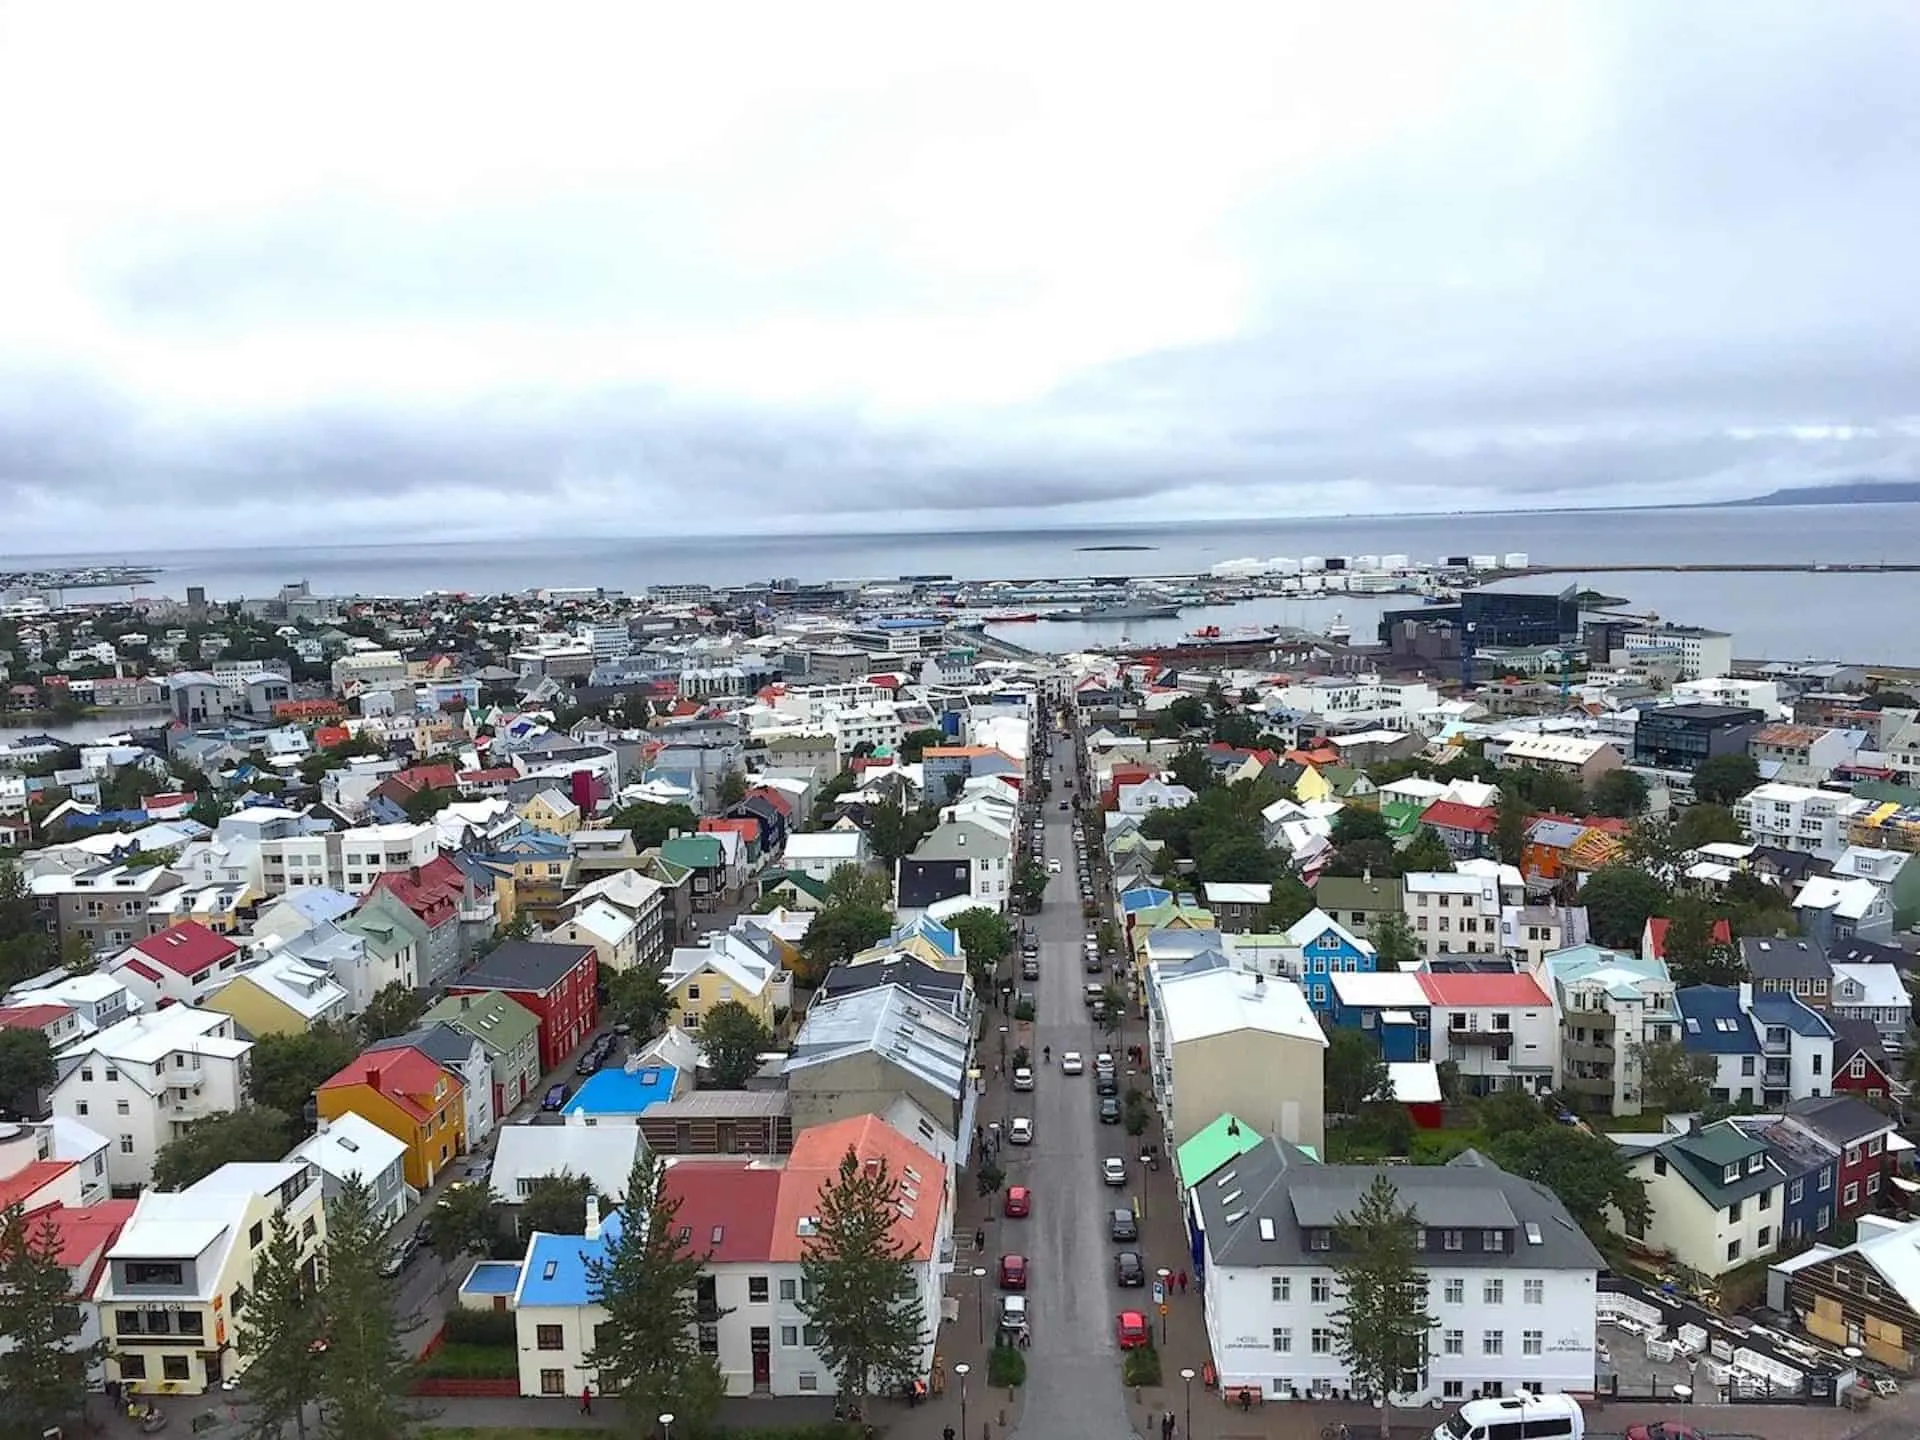 One Day in Reykjavik